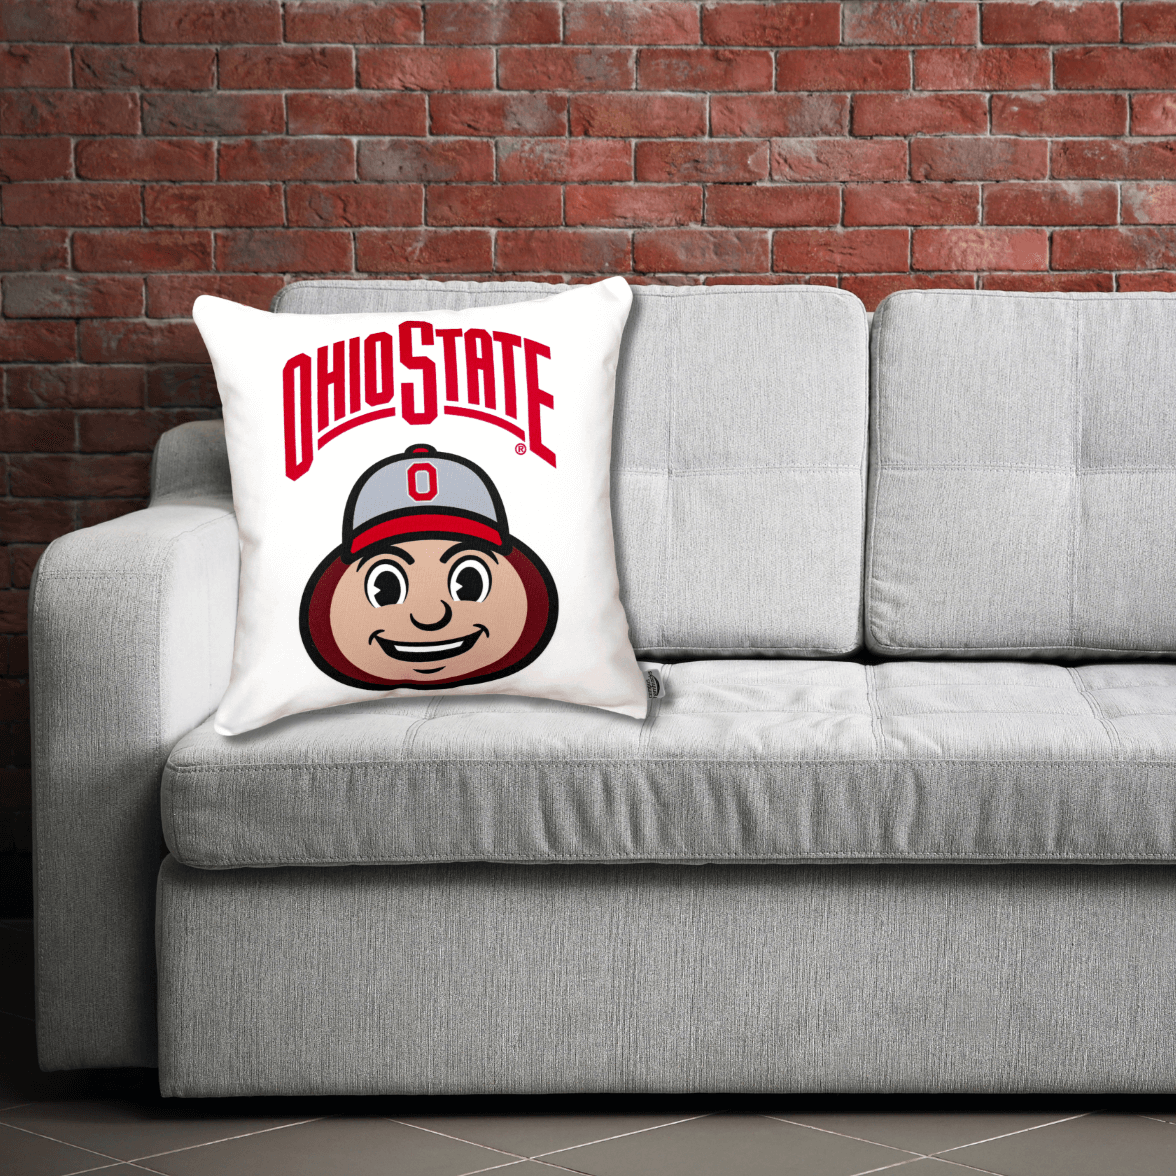 ohio state Buckeyes mascot pillow on a sofa